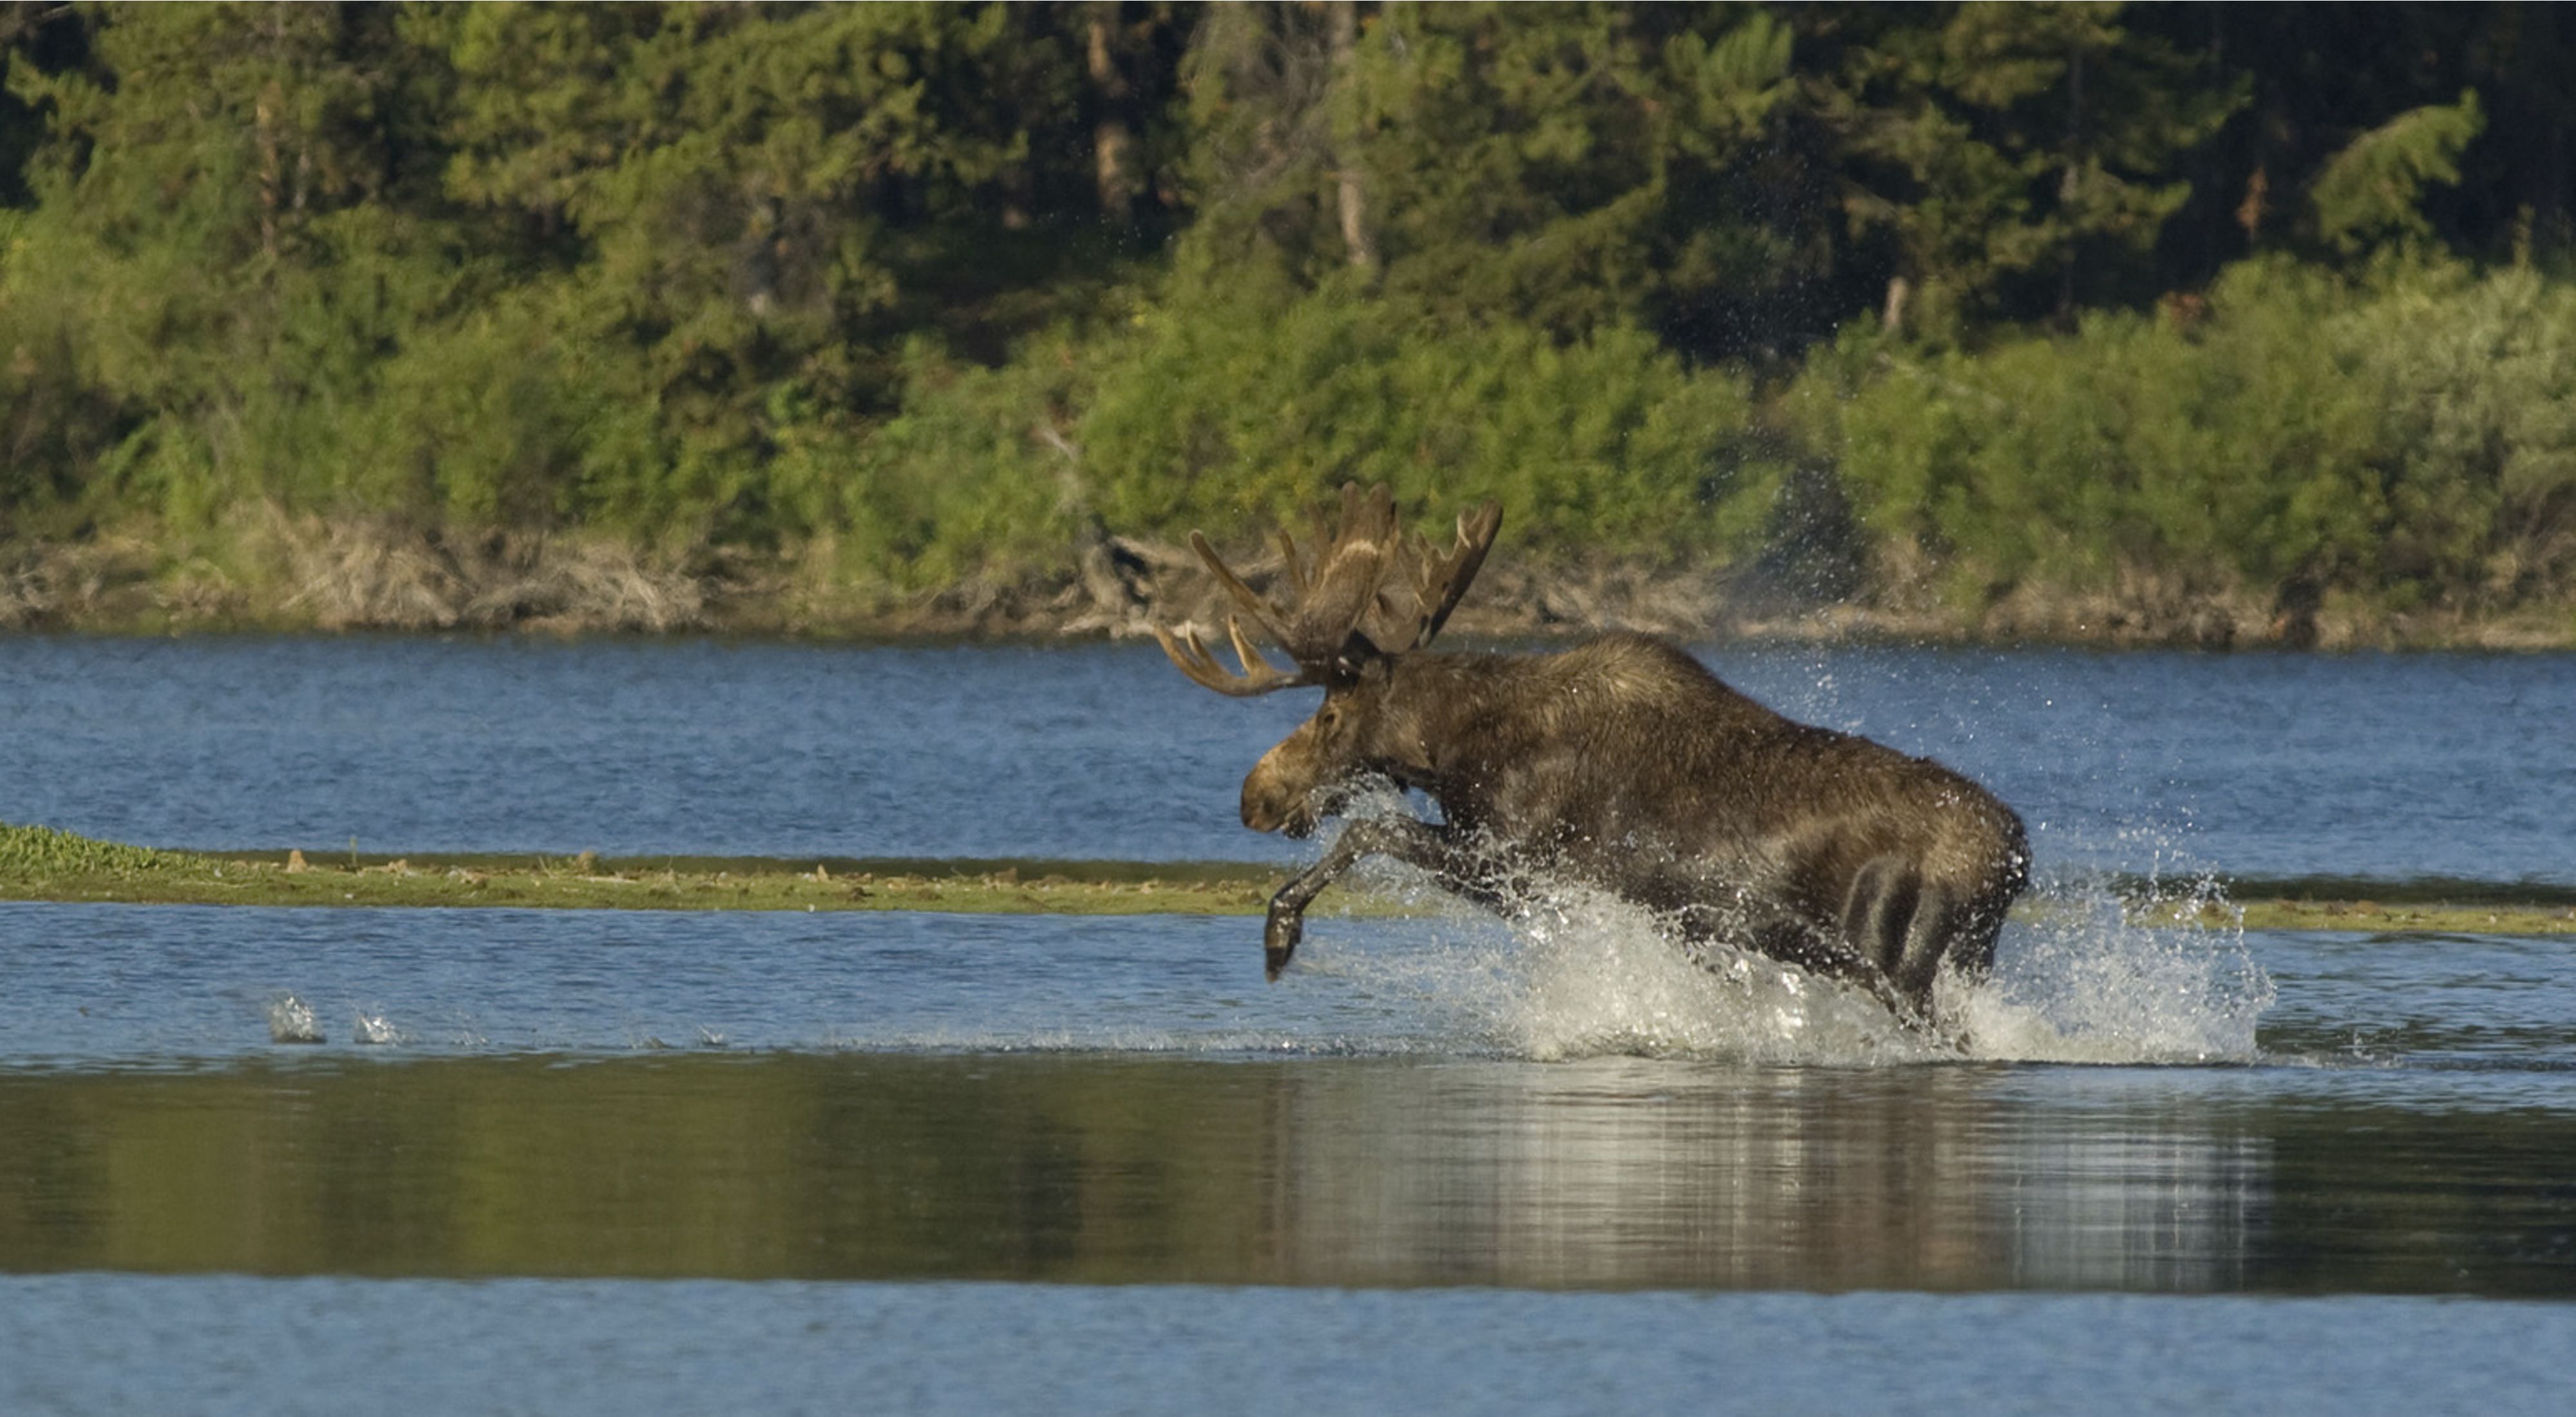 A male moose splashing through water several feet deep.